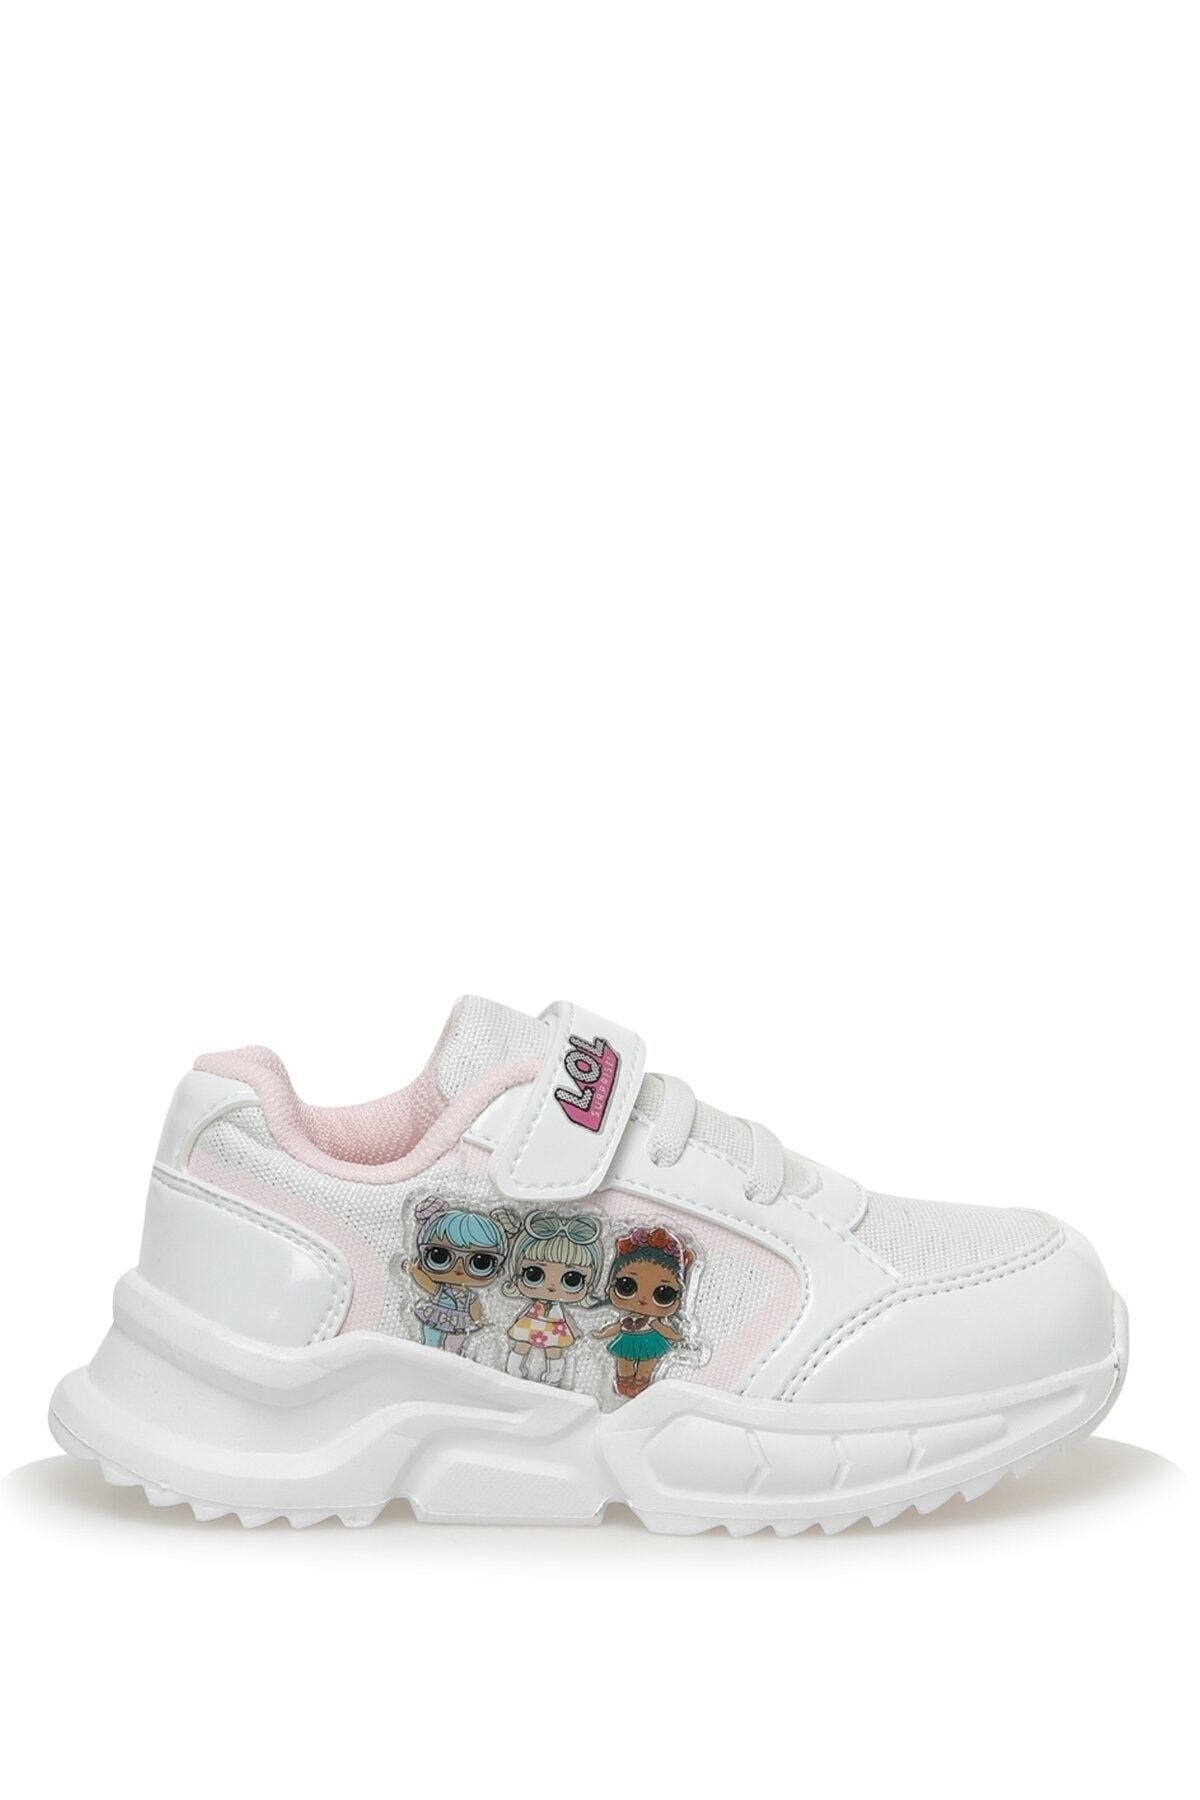 Lol Kepy.p3fx Beyaz Kız Çocuk Sneaker